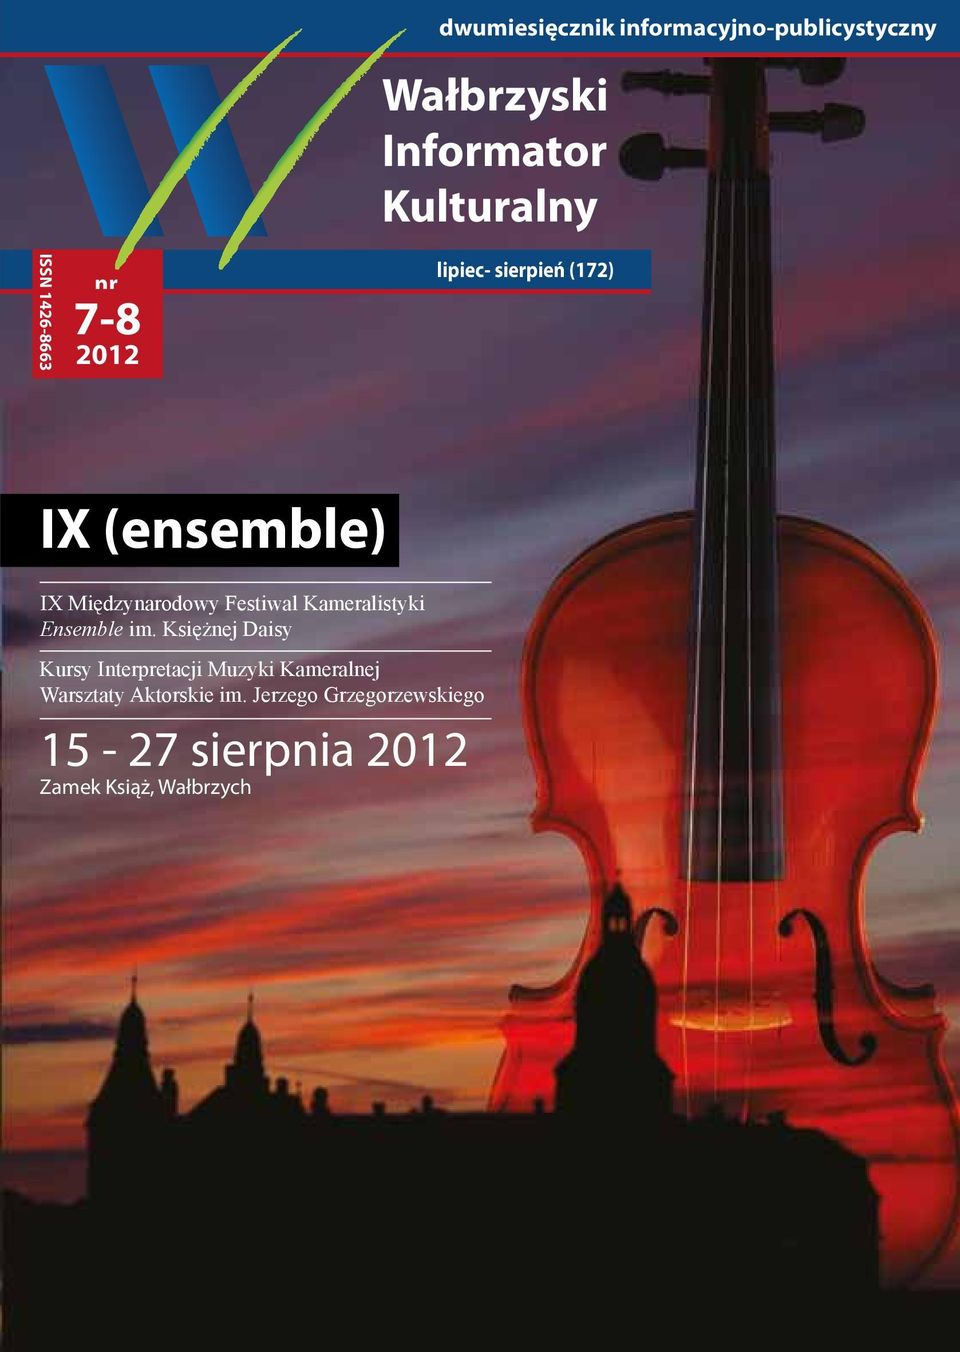 Festiwal Kameralistyki Ensemble im.